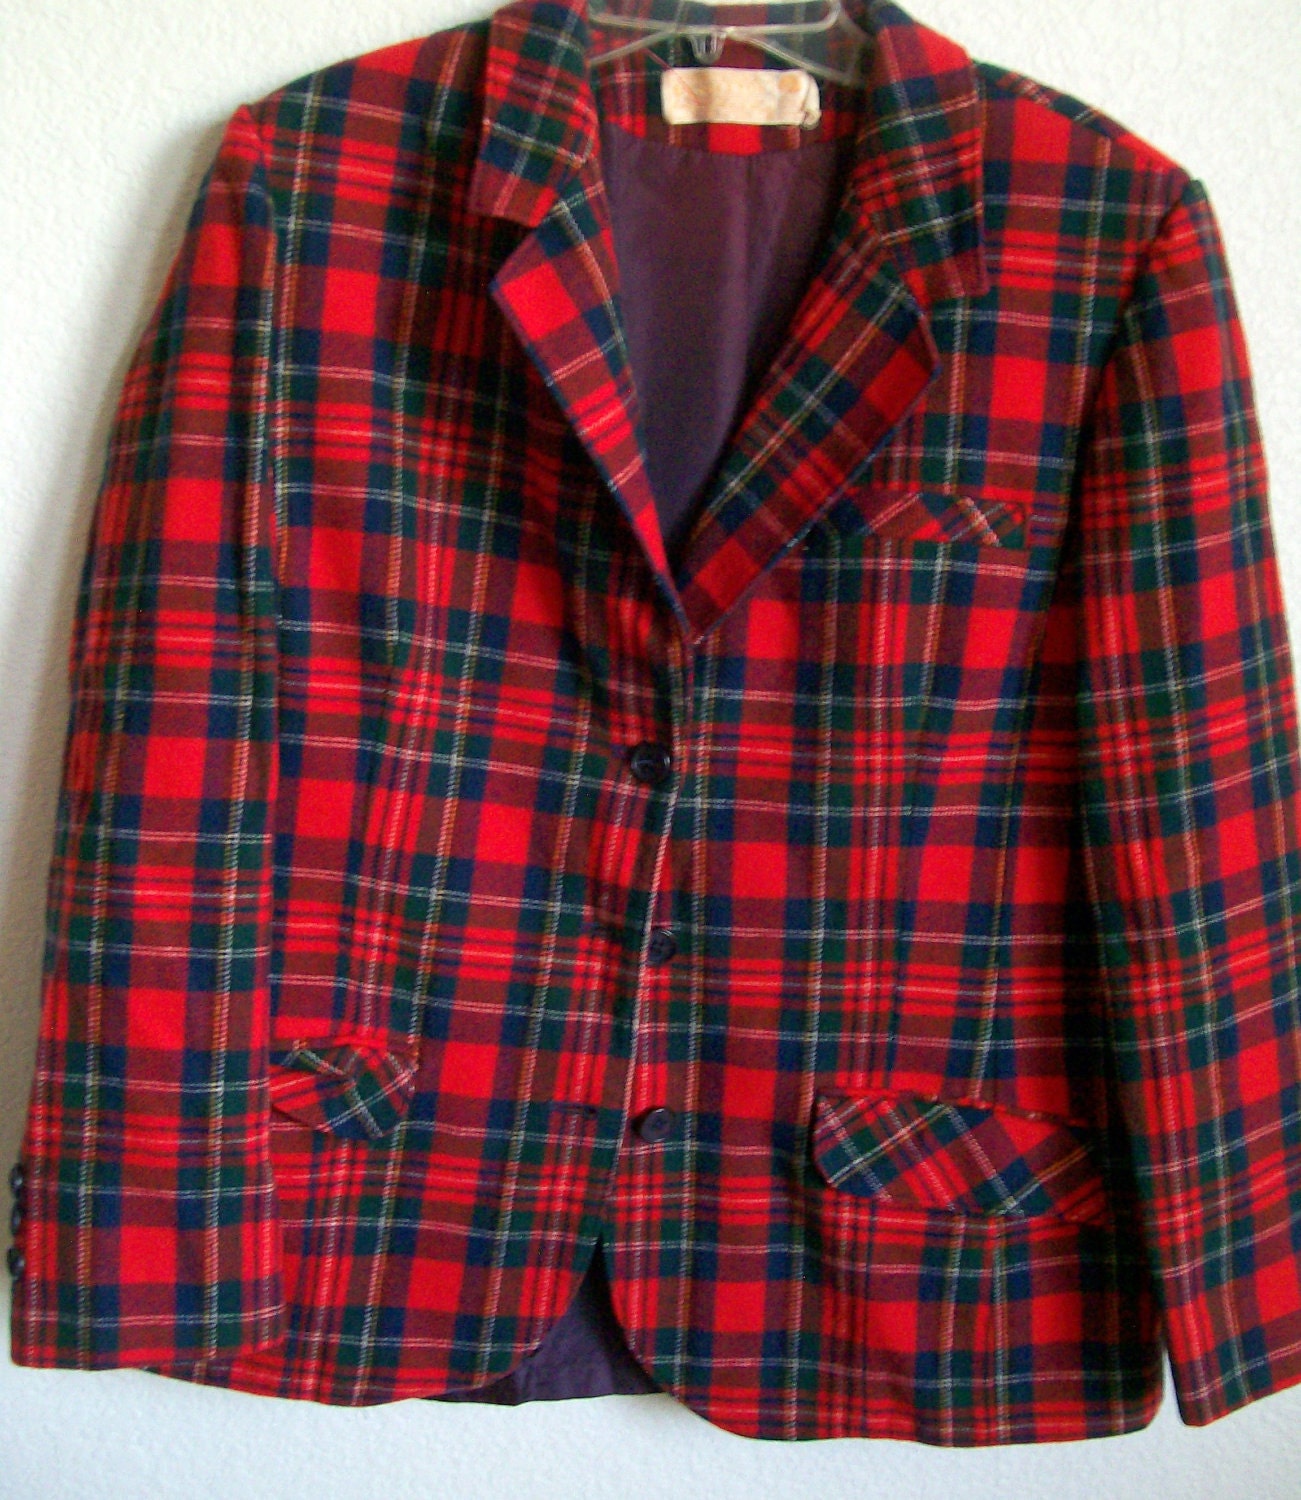 Vintage Pendleton Red Plaid Blazer Jacket size 18 by luvredford